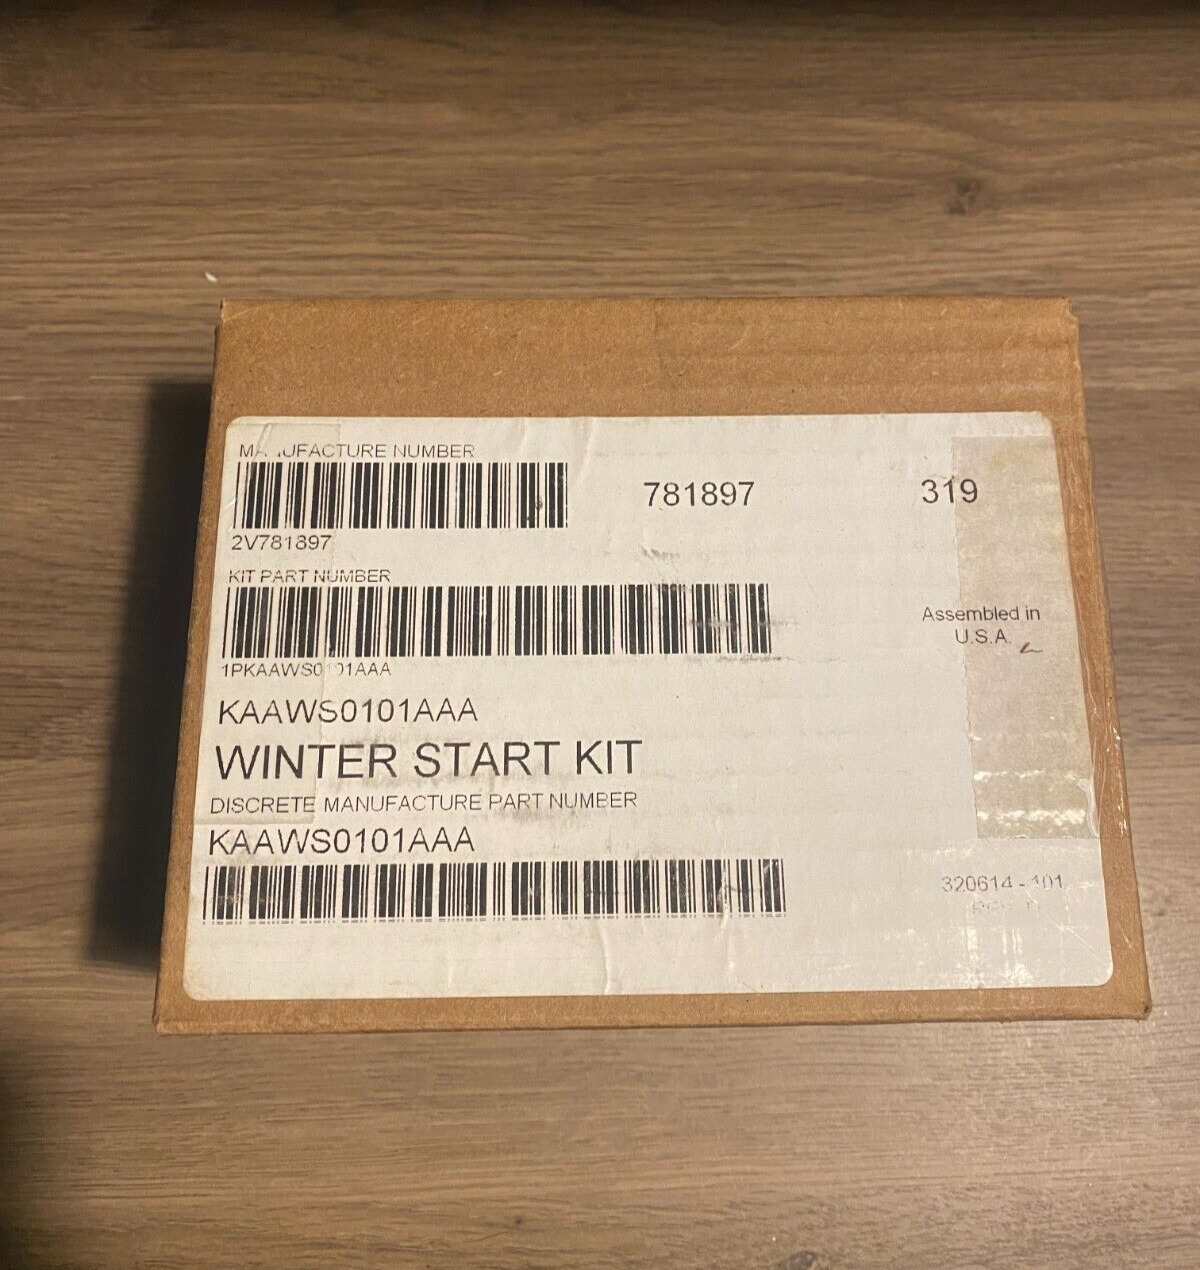 Winter Start Kit KAAWS0101AAA Bryant/Carrier Winter Start Control